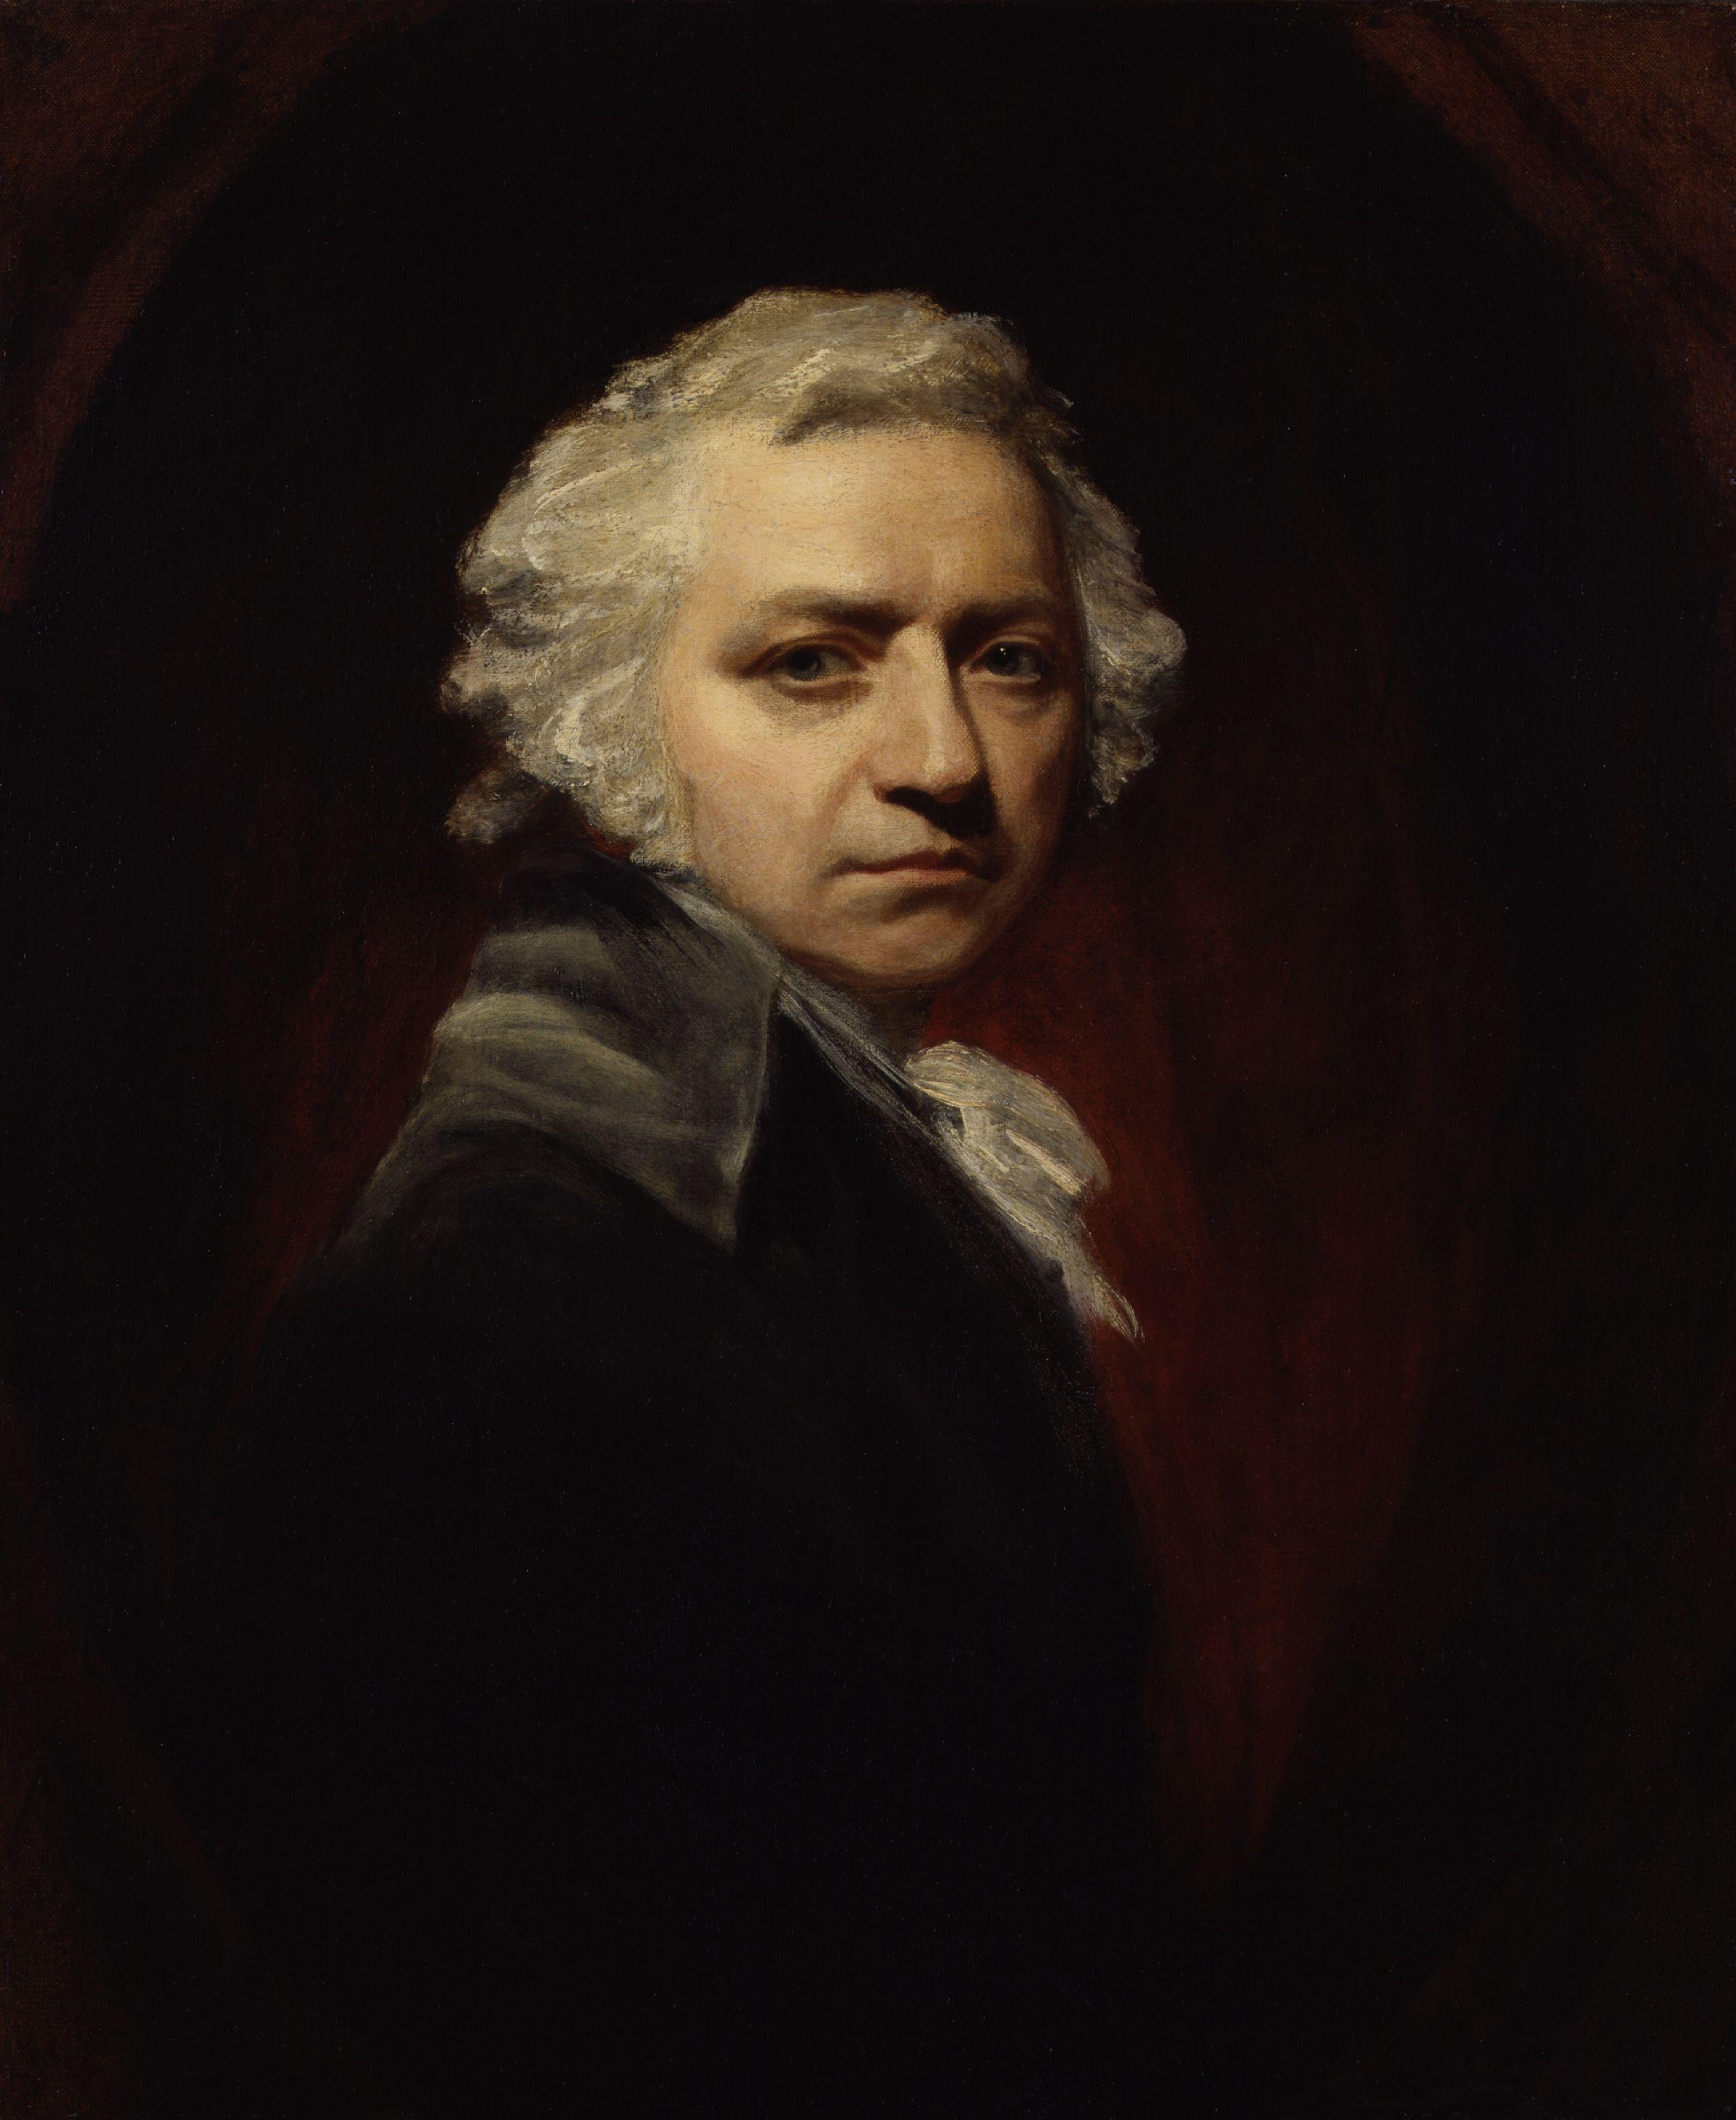 Henry Fuseli - February 7, 1741 - April 17, 1825